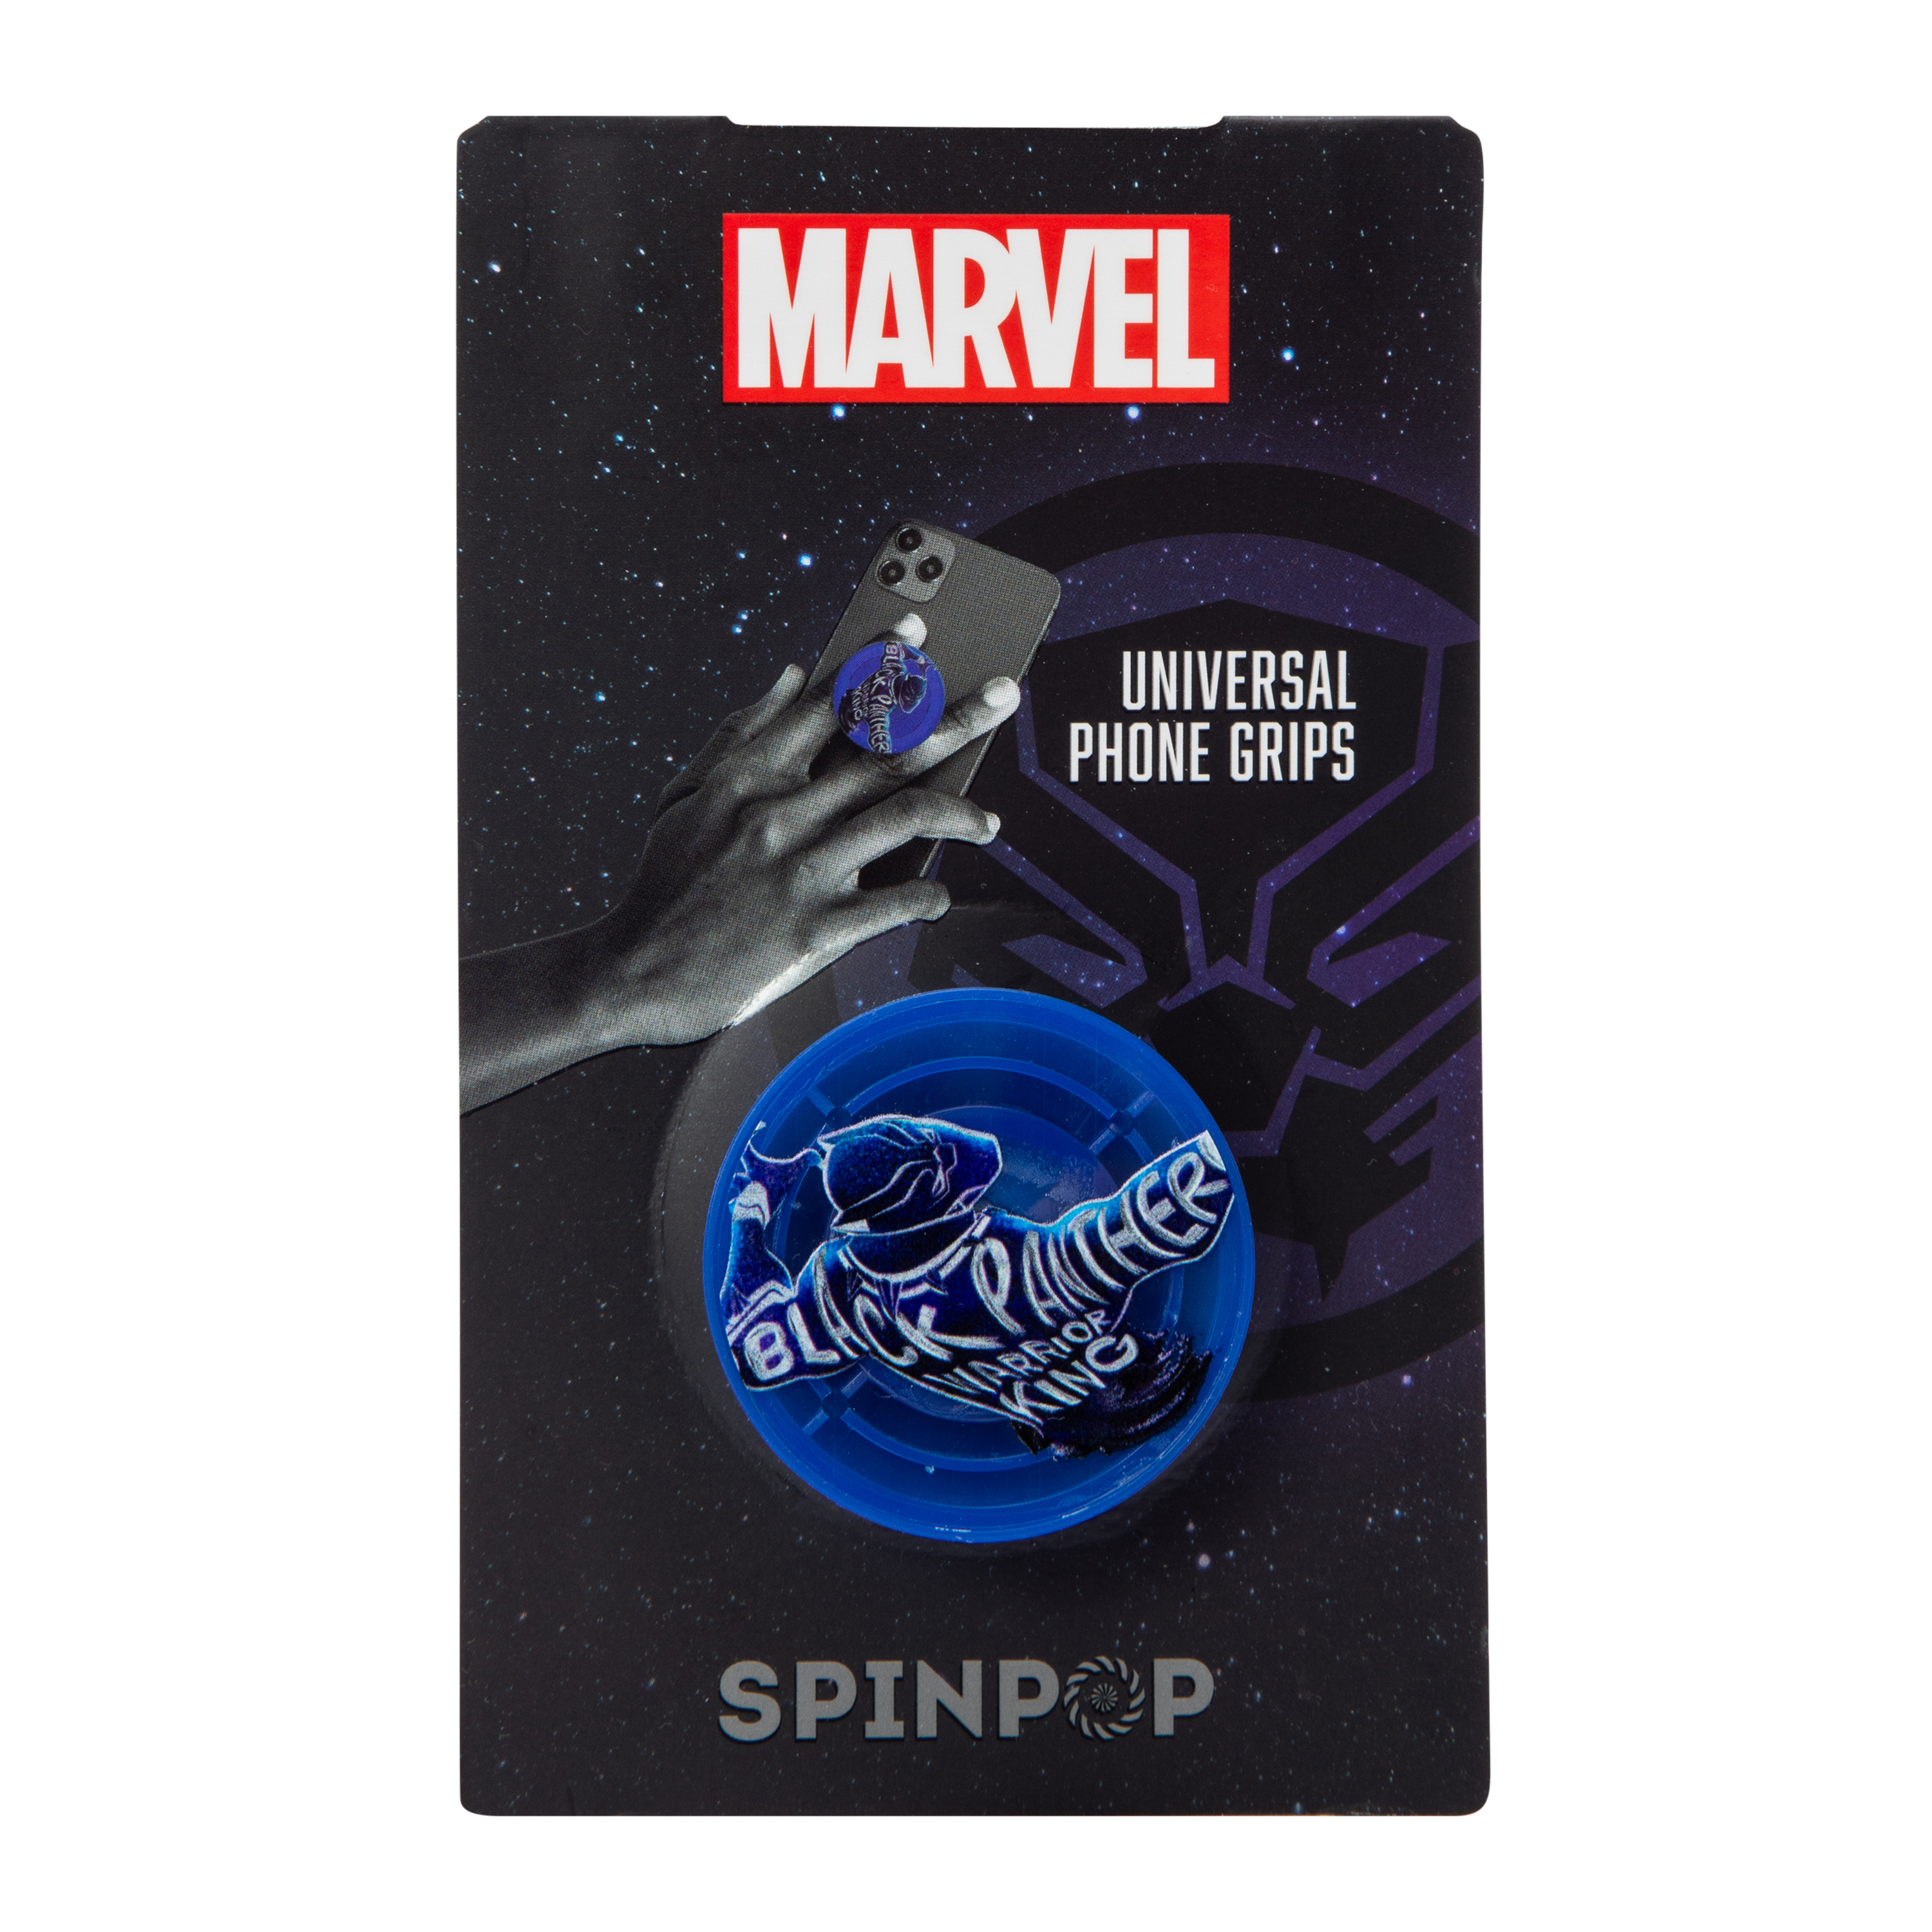 Marvel Spinpop Phone Grip